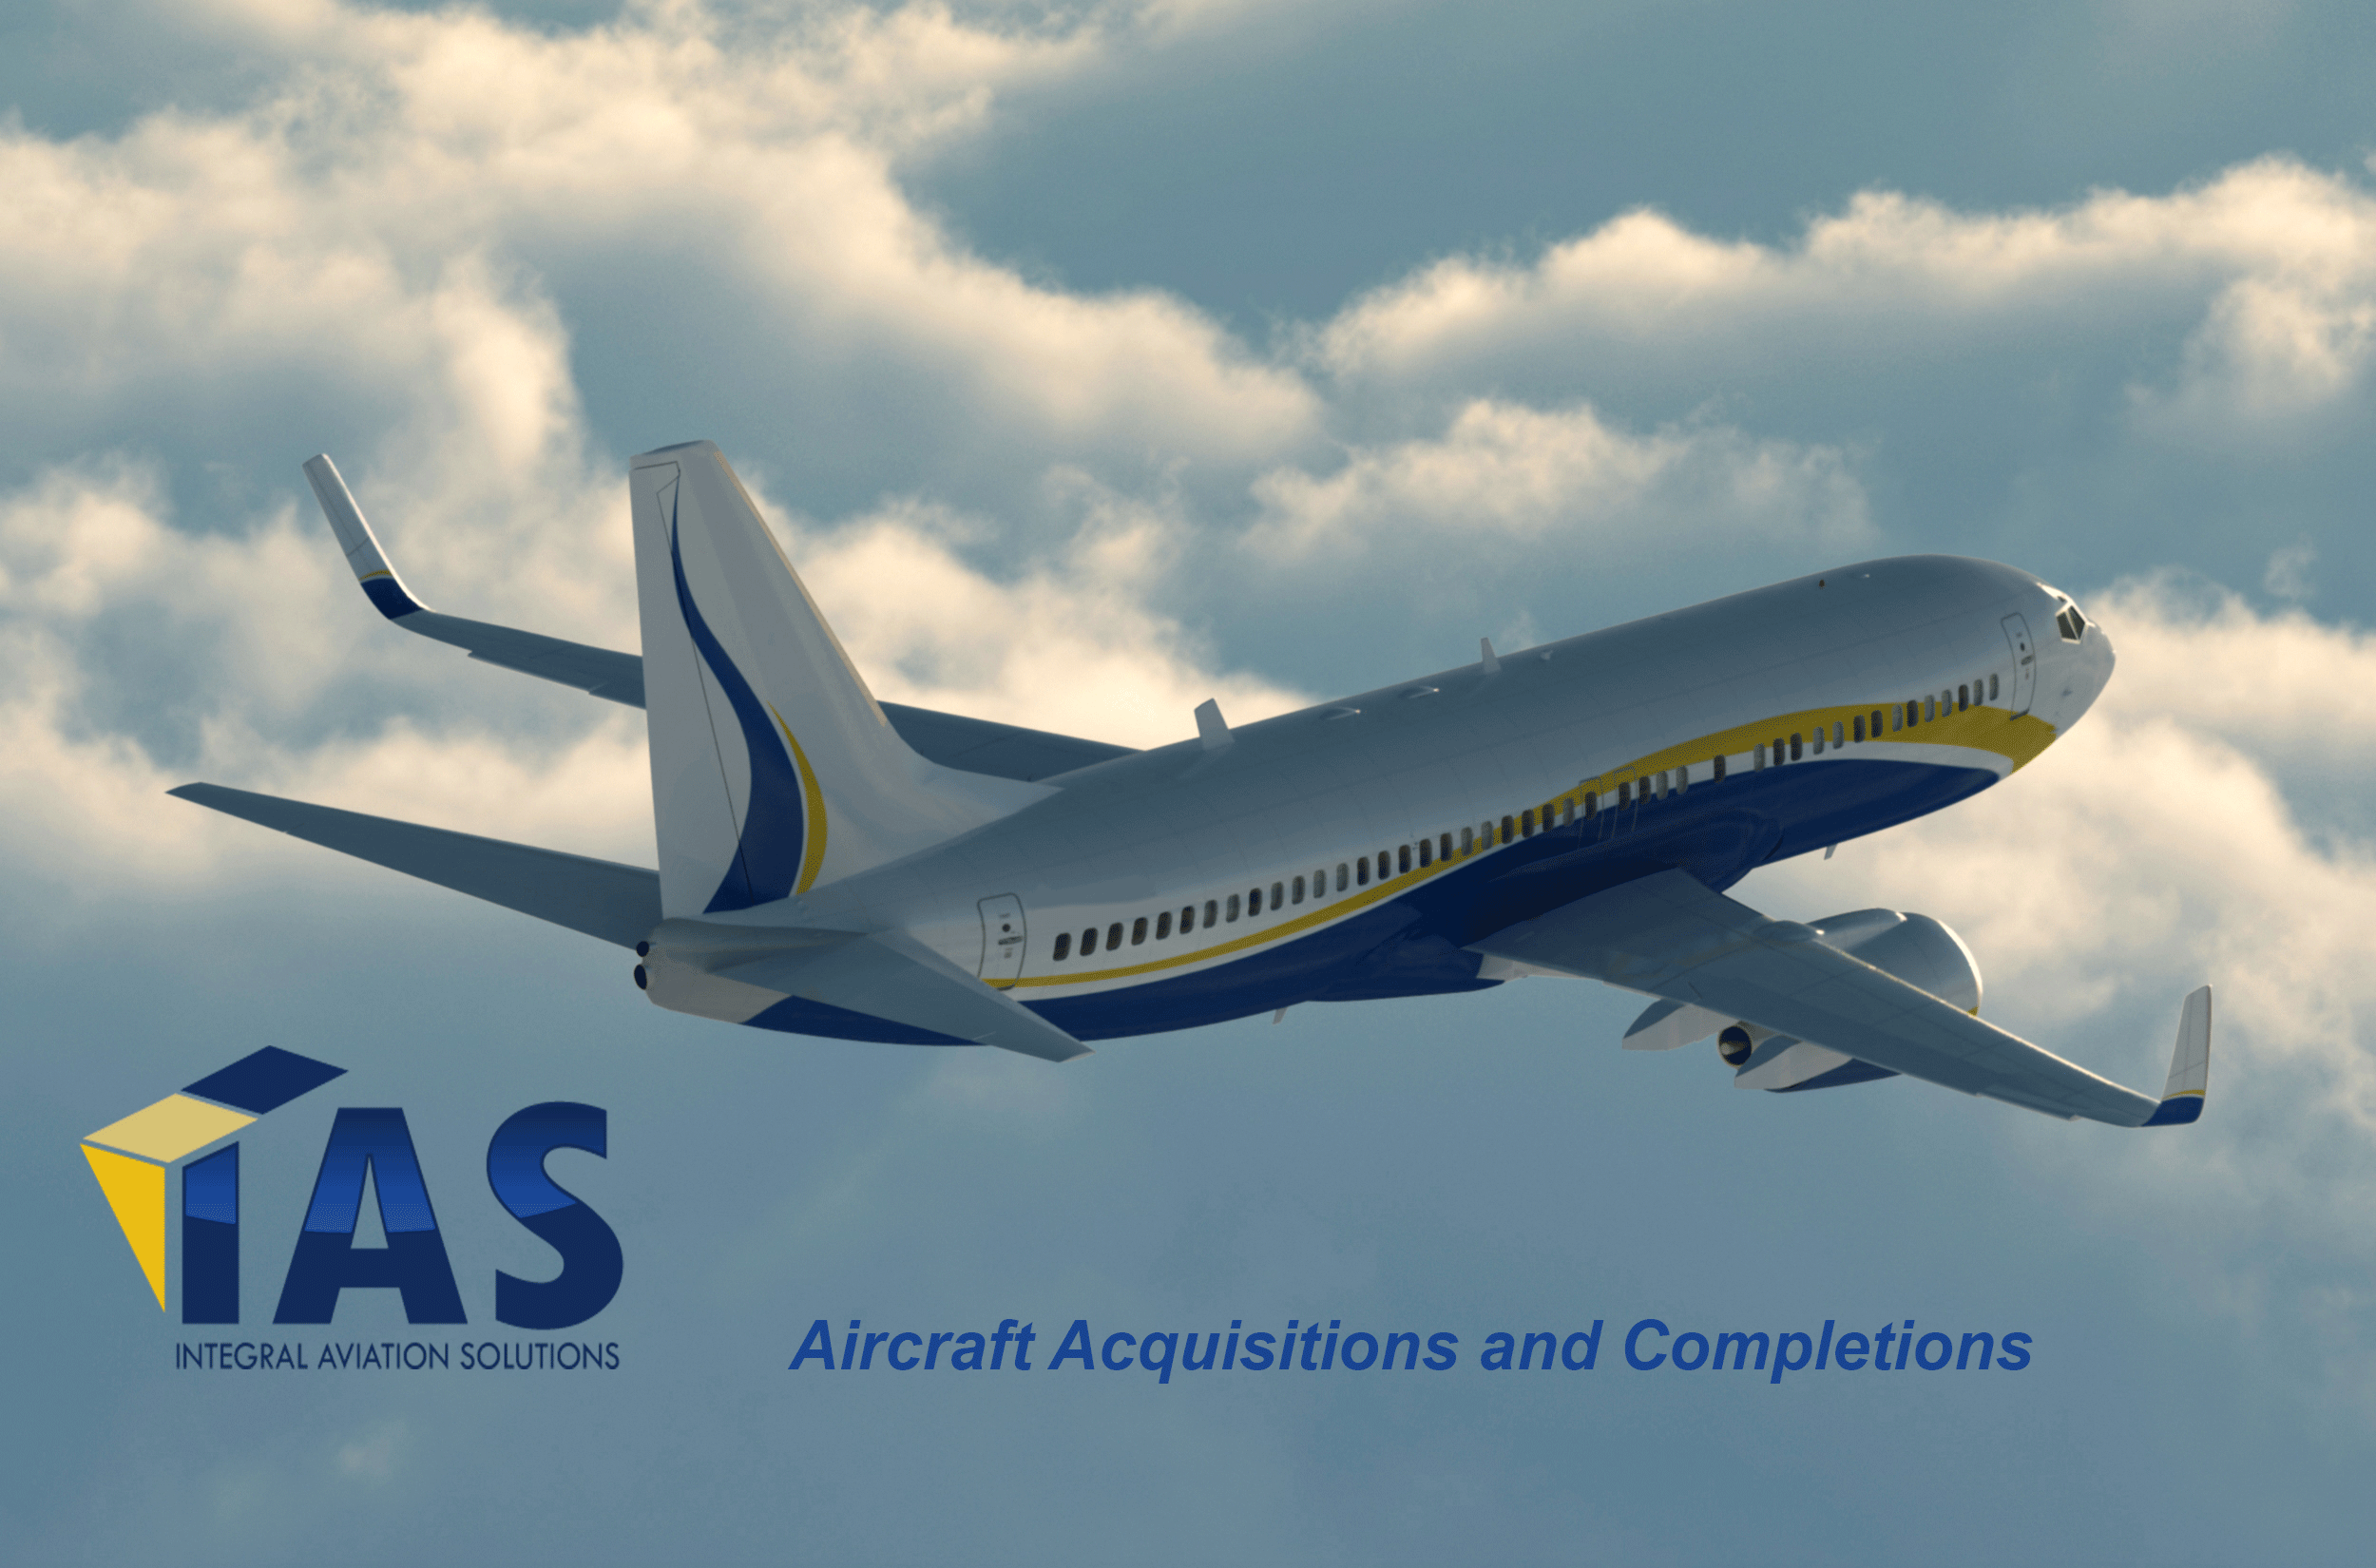 Integral Aviation Solutions Inc